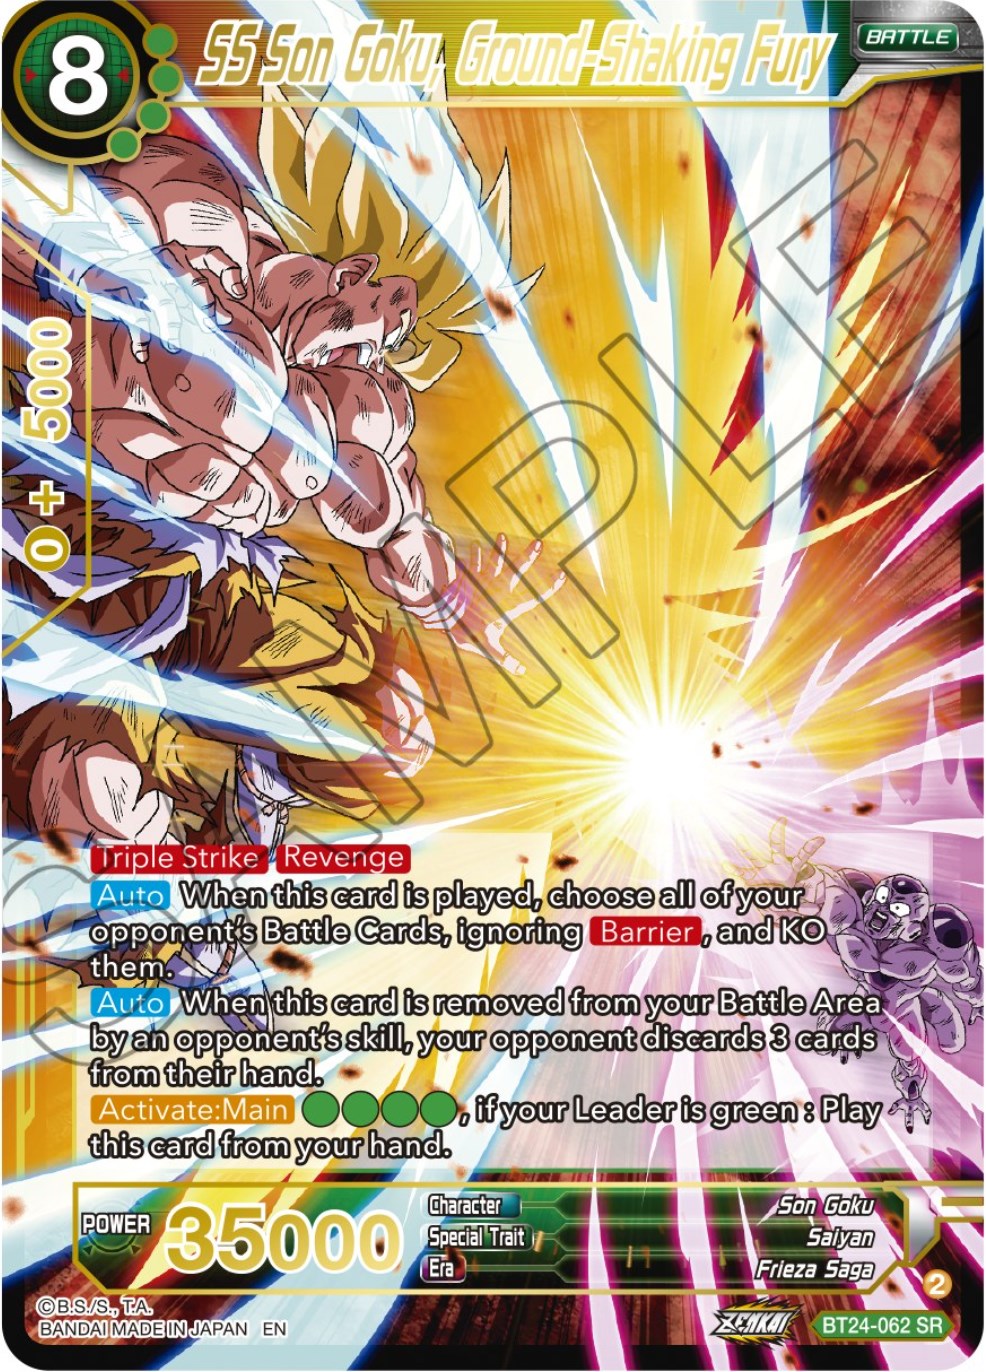 SS Son Goku, Ground-Shaking Fury (BT24-062) [Beyond Generations] | Devastation Store